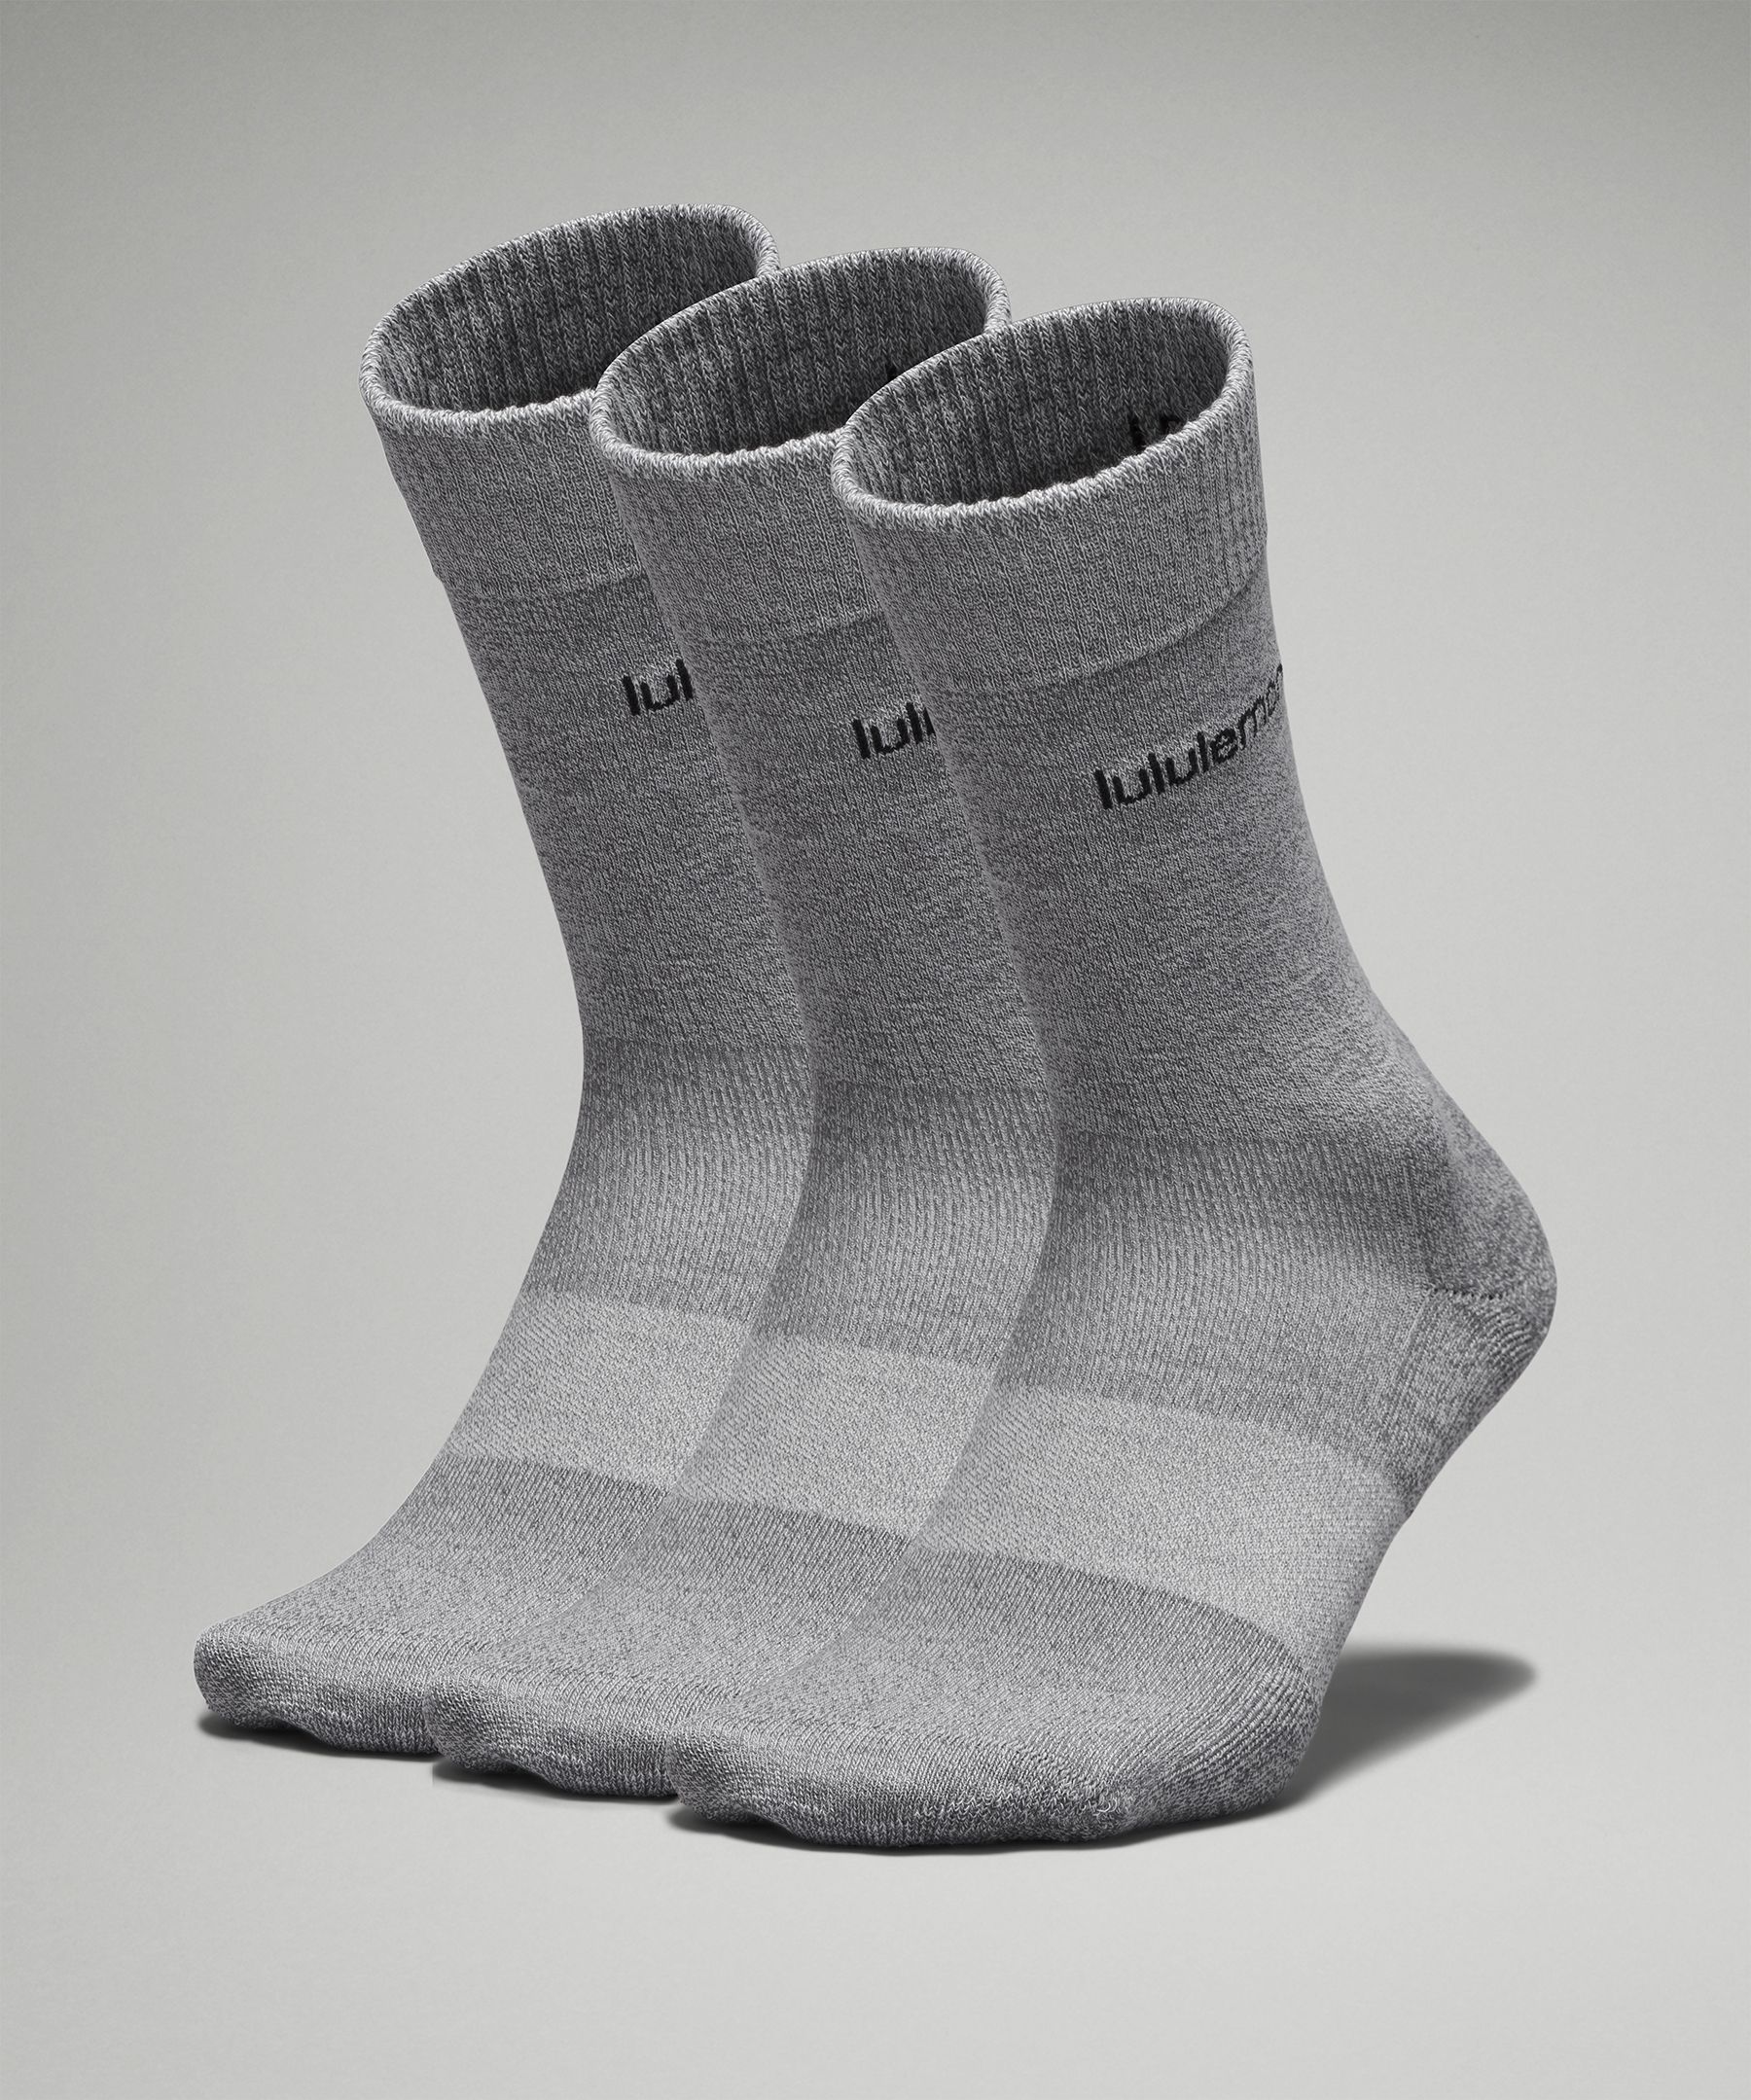 Ame & LuLu Meet Your Match Socks- Grey Camo socks197